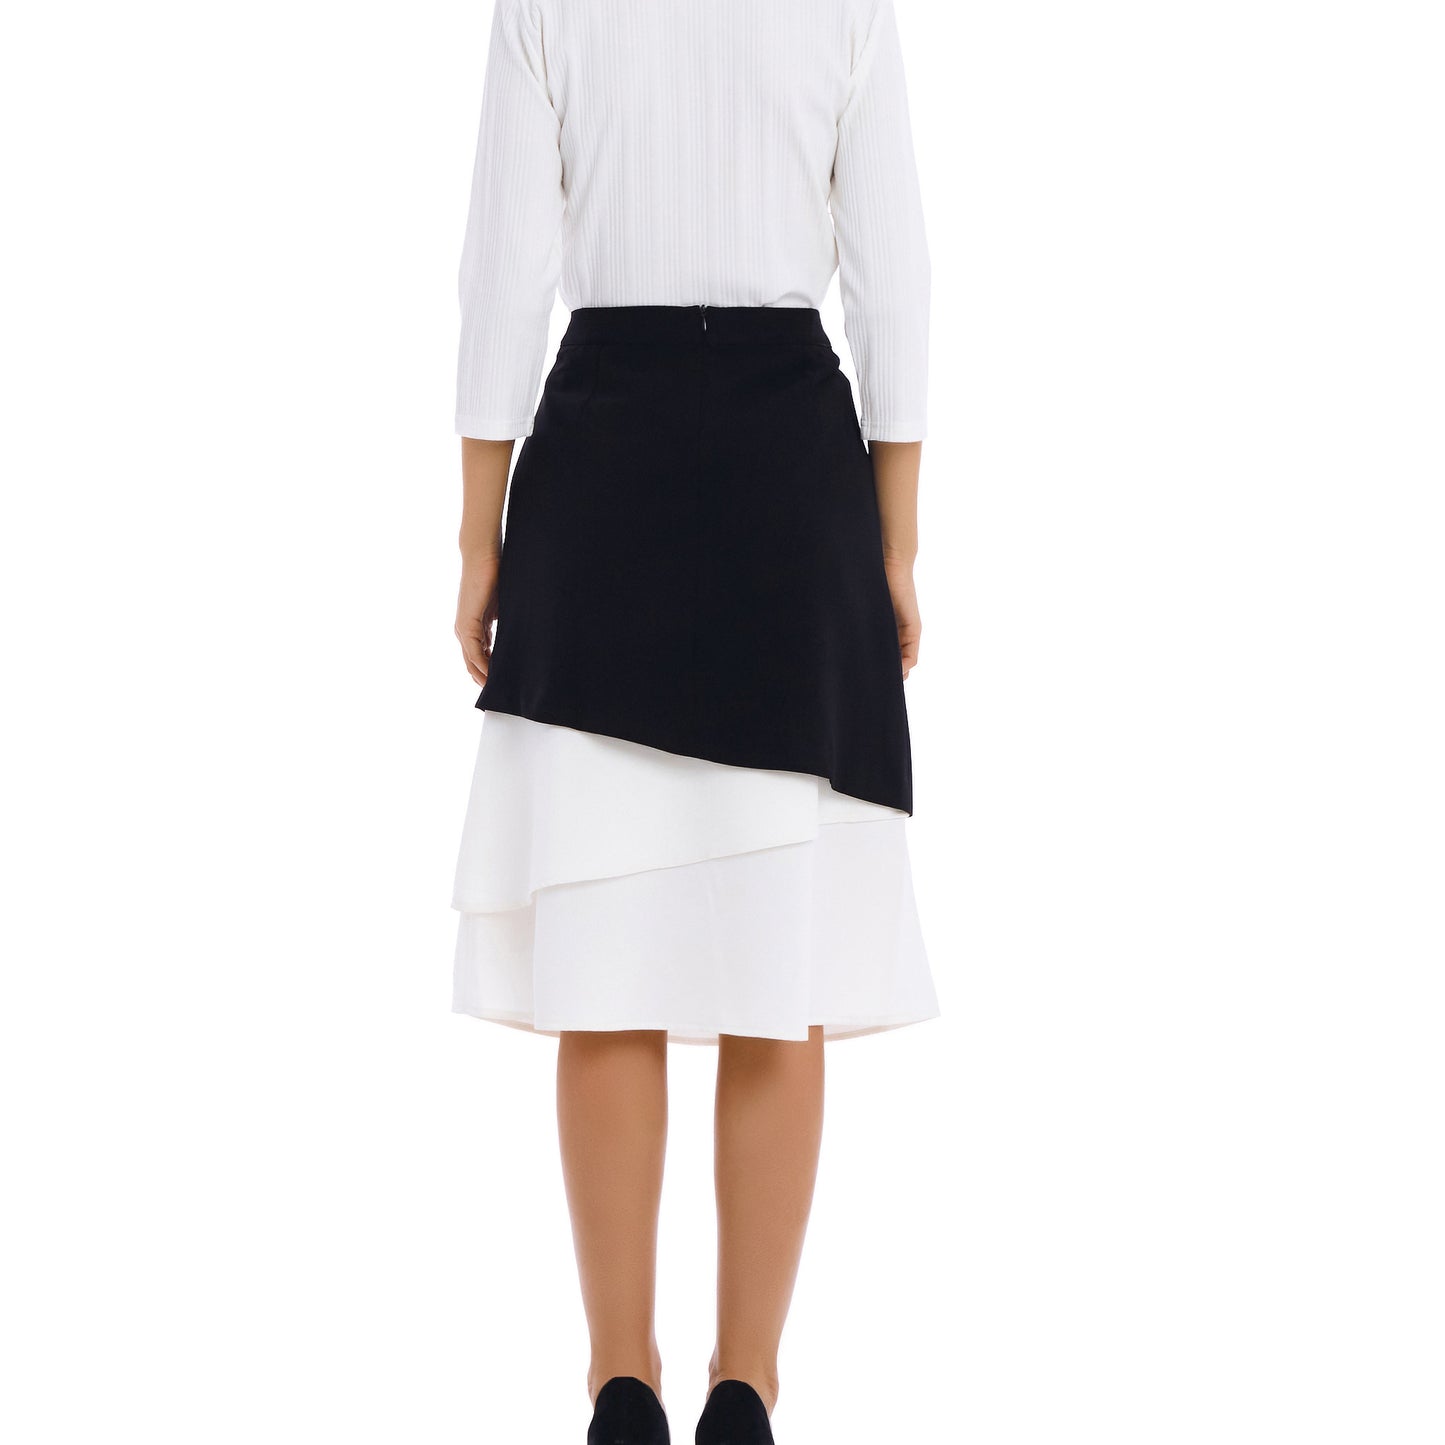 Contrast White Fabric Midi Skirt - alamaud